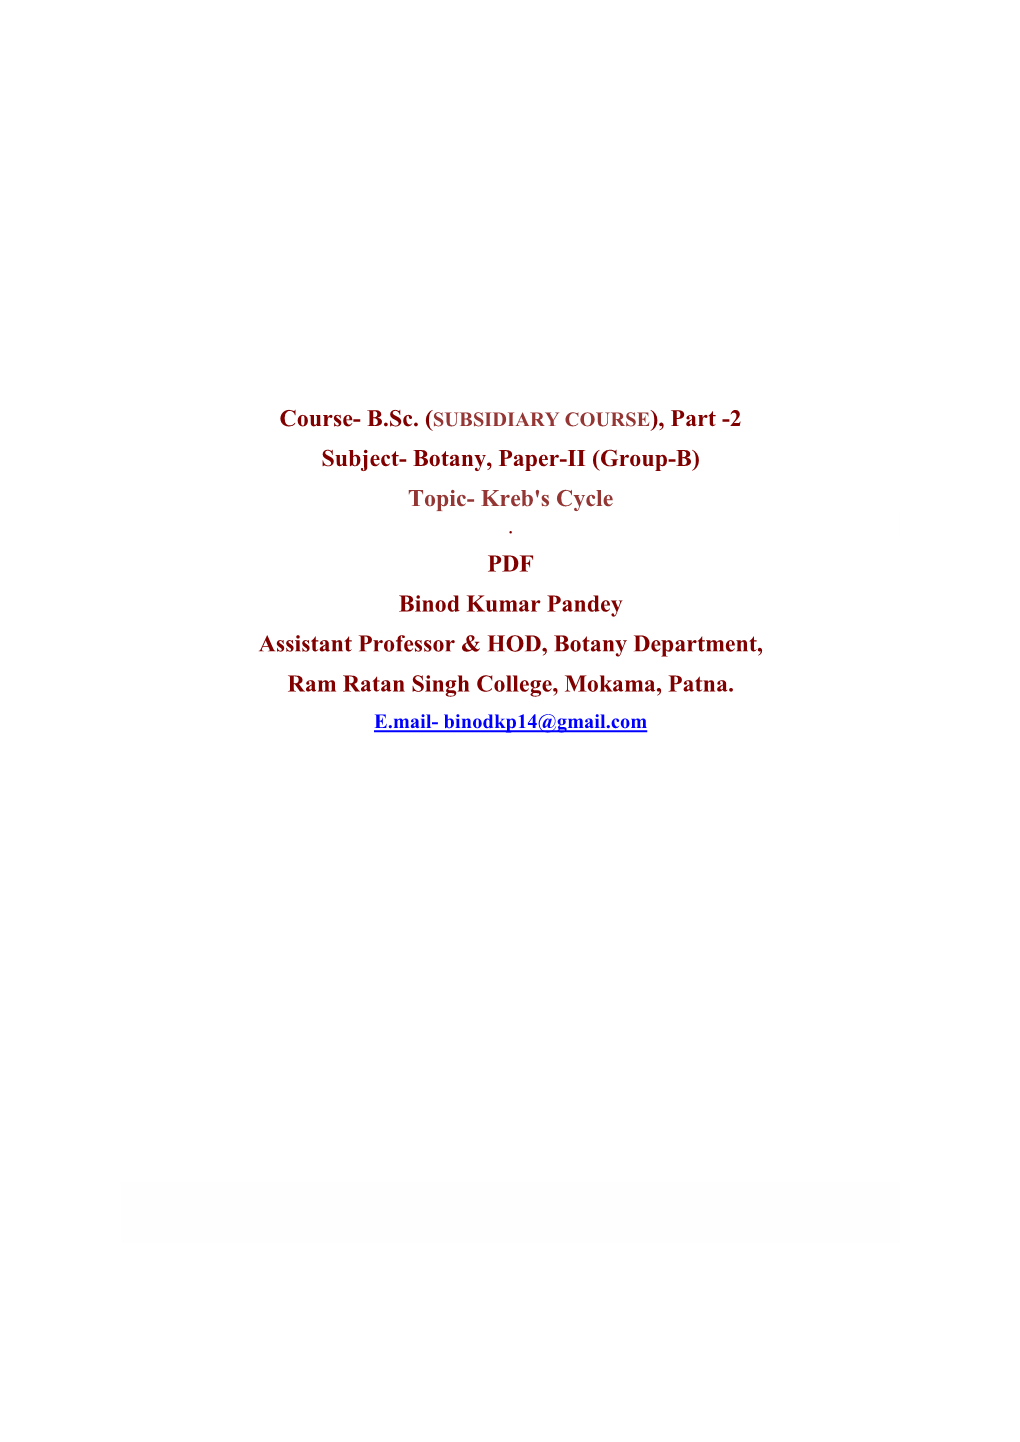 Subject- Botany, Paper-II (Group-B) Topic- Kreb's Cycle . PDF Binod Kumar Pandey Assistant Professor & HOD, Botany Department, Ram Ratan Singh College, Mokama, Patna